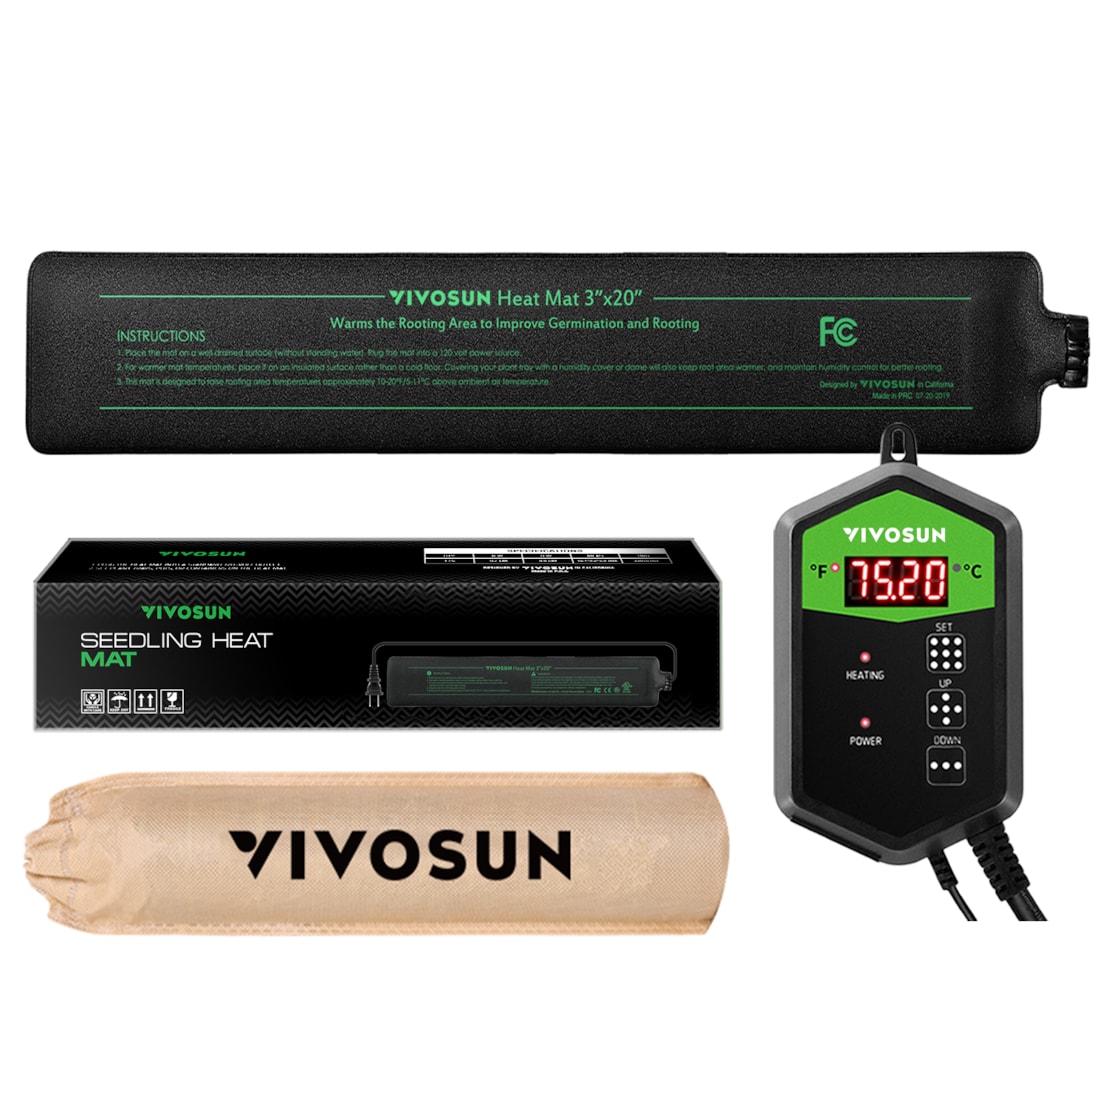 VIVOSUN Seedling Heat Mat Digital Thermostat Combo 3" x 20"